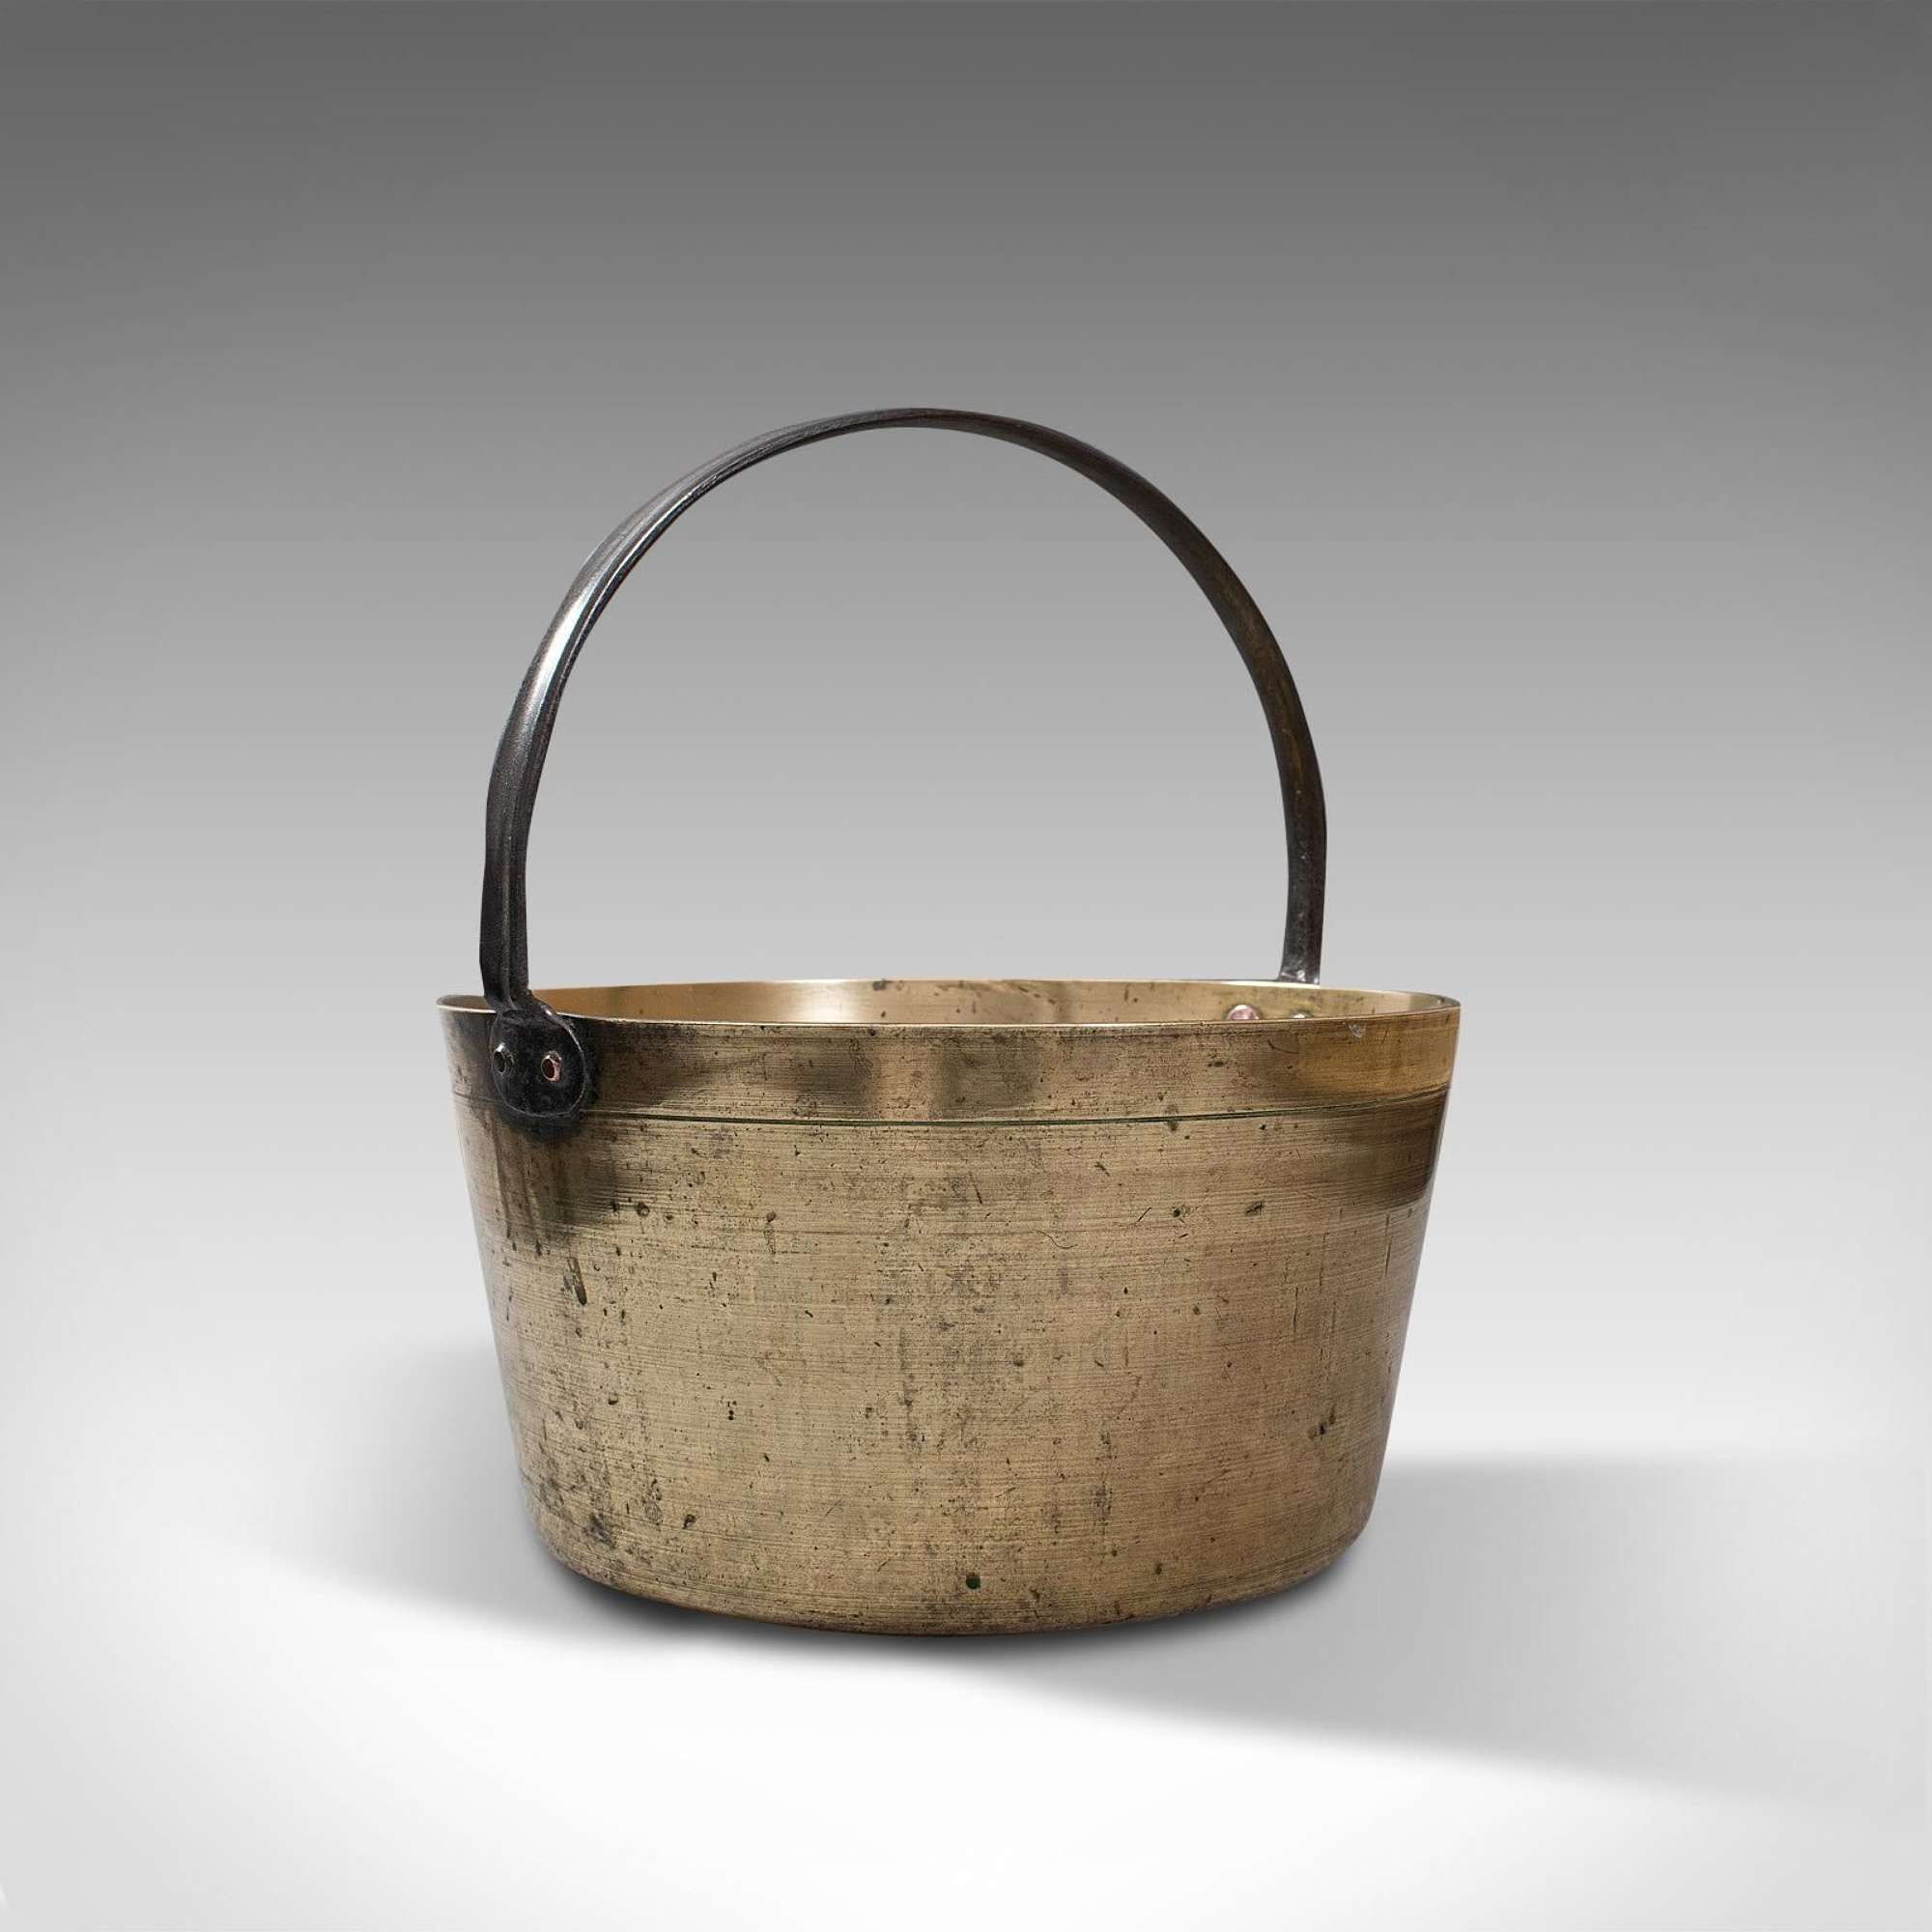 Antique Preserving Pan, English, Heavy Brass, Jam, Cooking Pot, Georgian C.1800